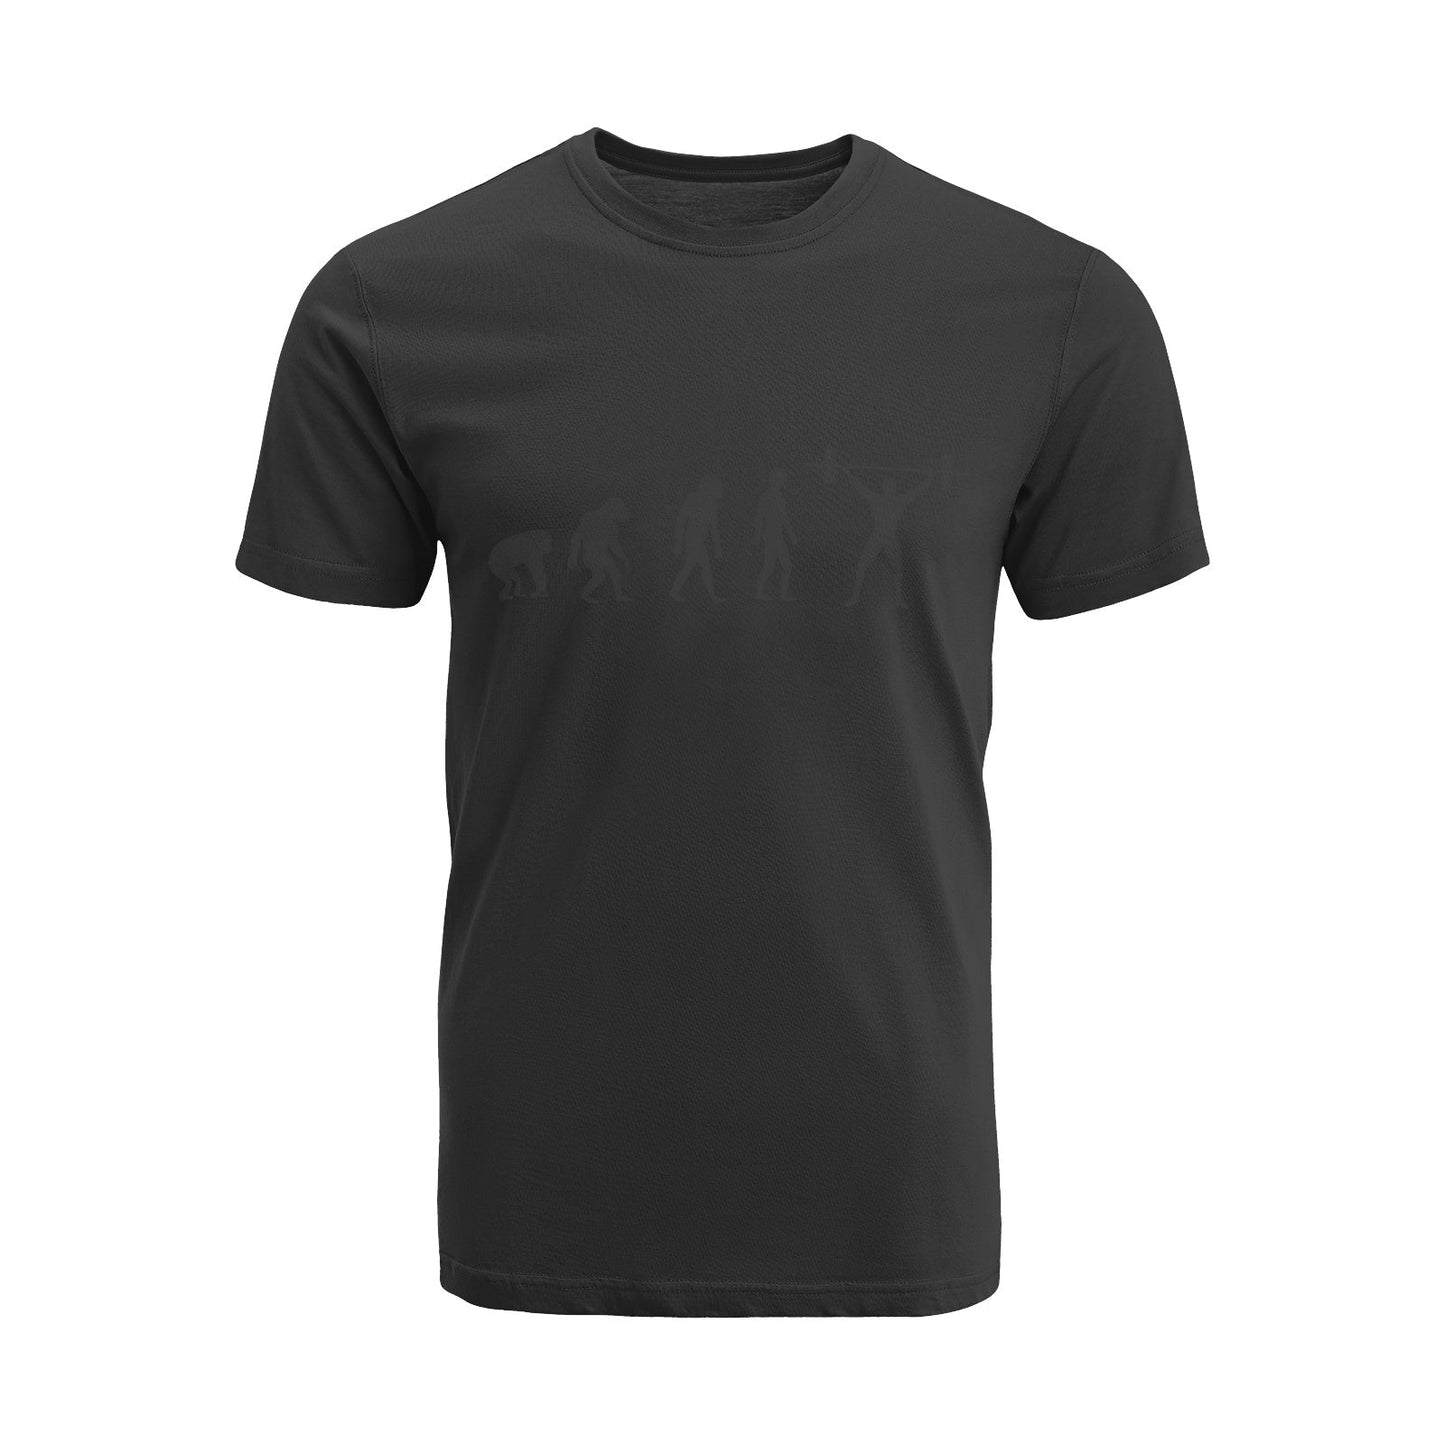 Unisex Short Sleeve Crew Neck Cotton Jersey T-Shirt Gym No. 12 - Tara-Outfits.com